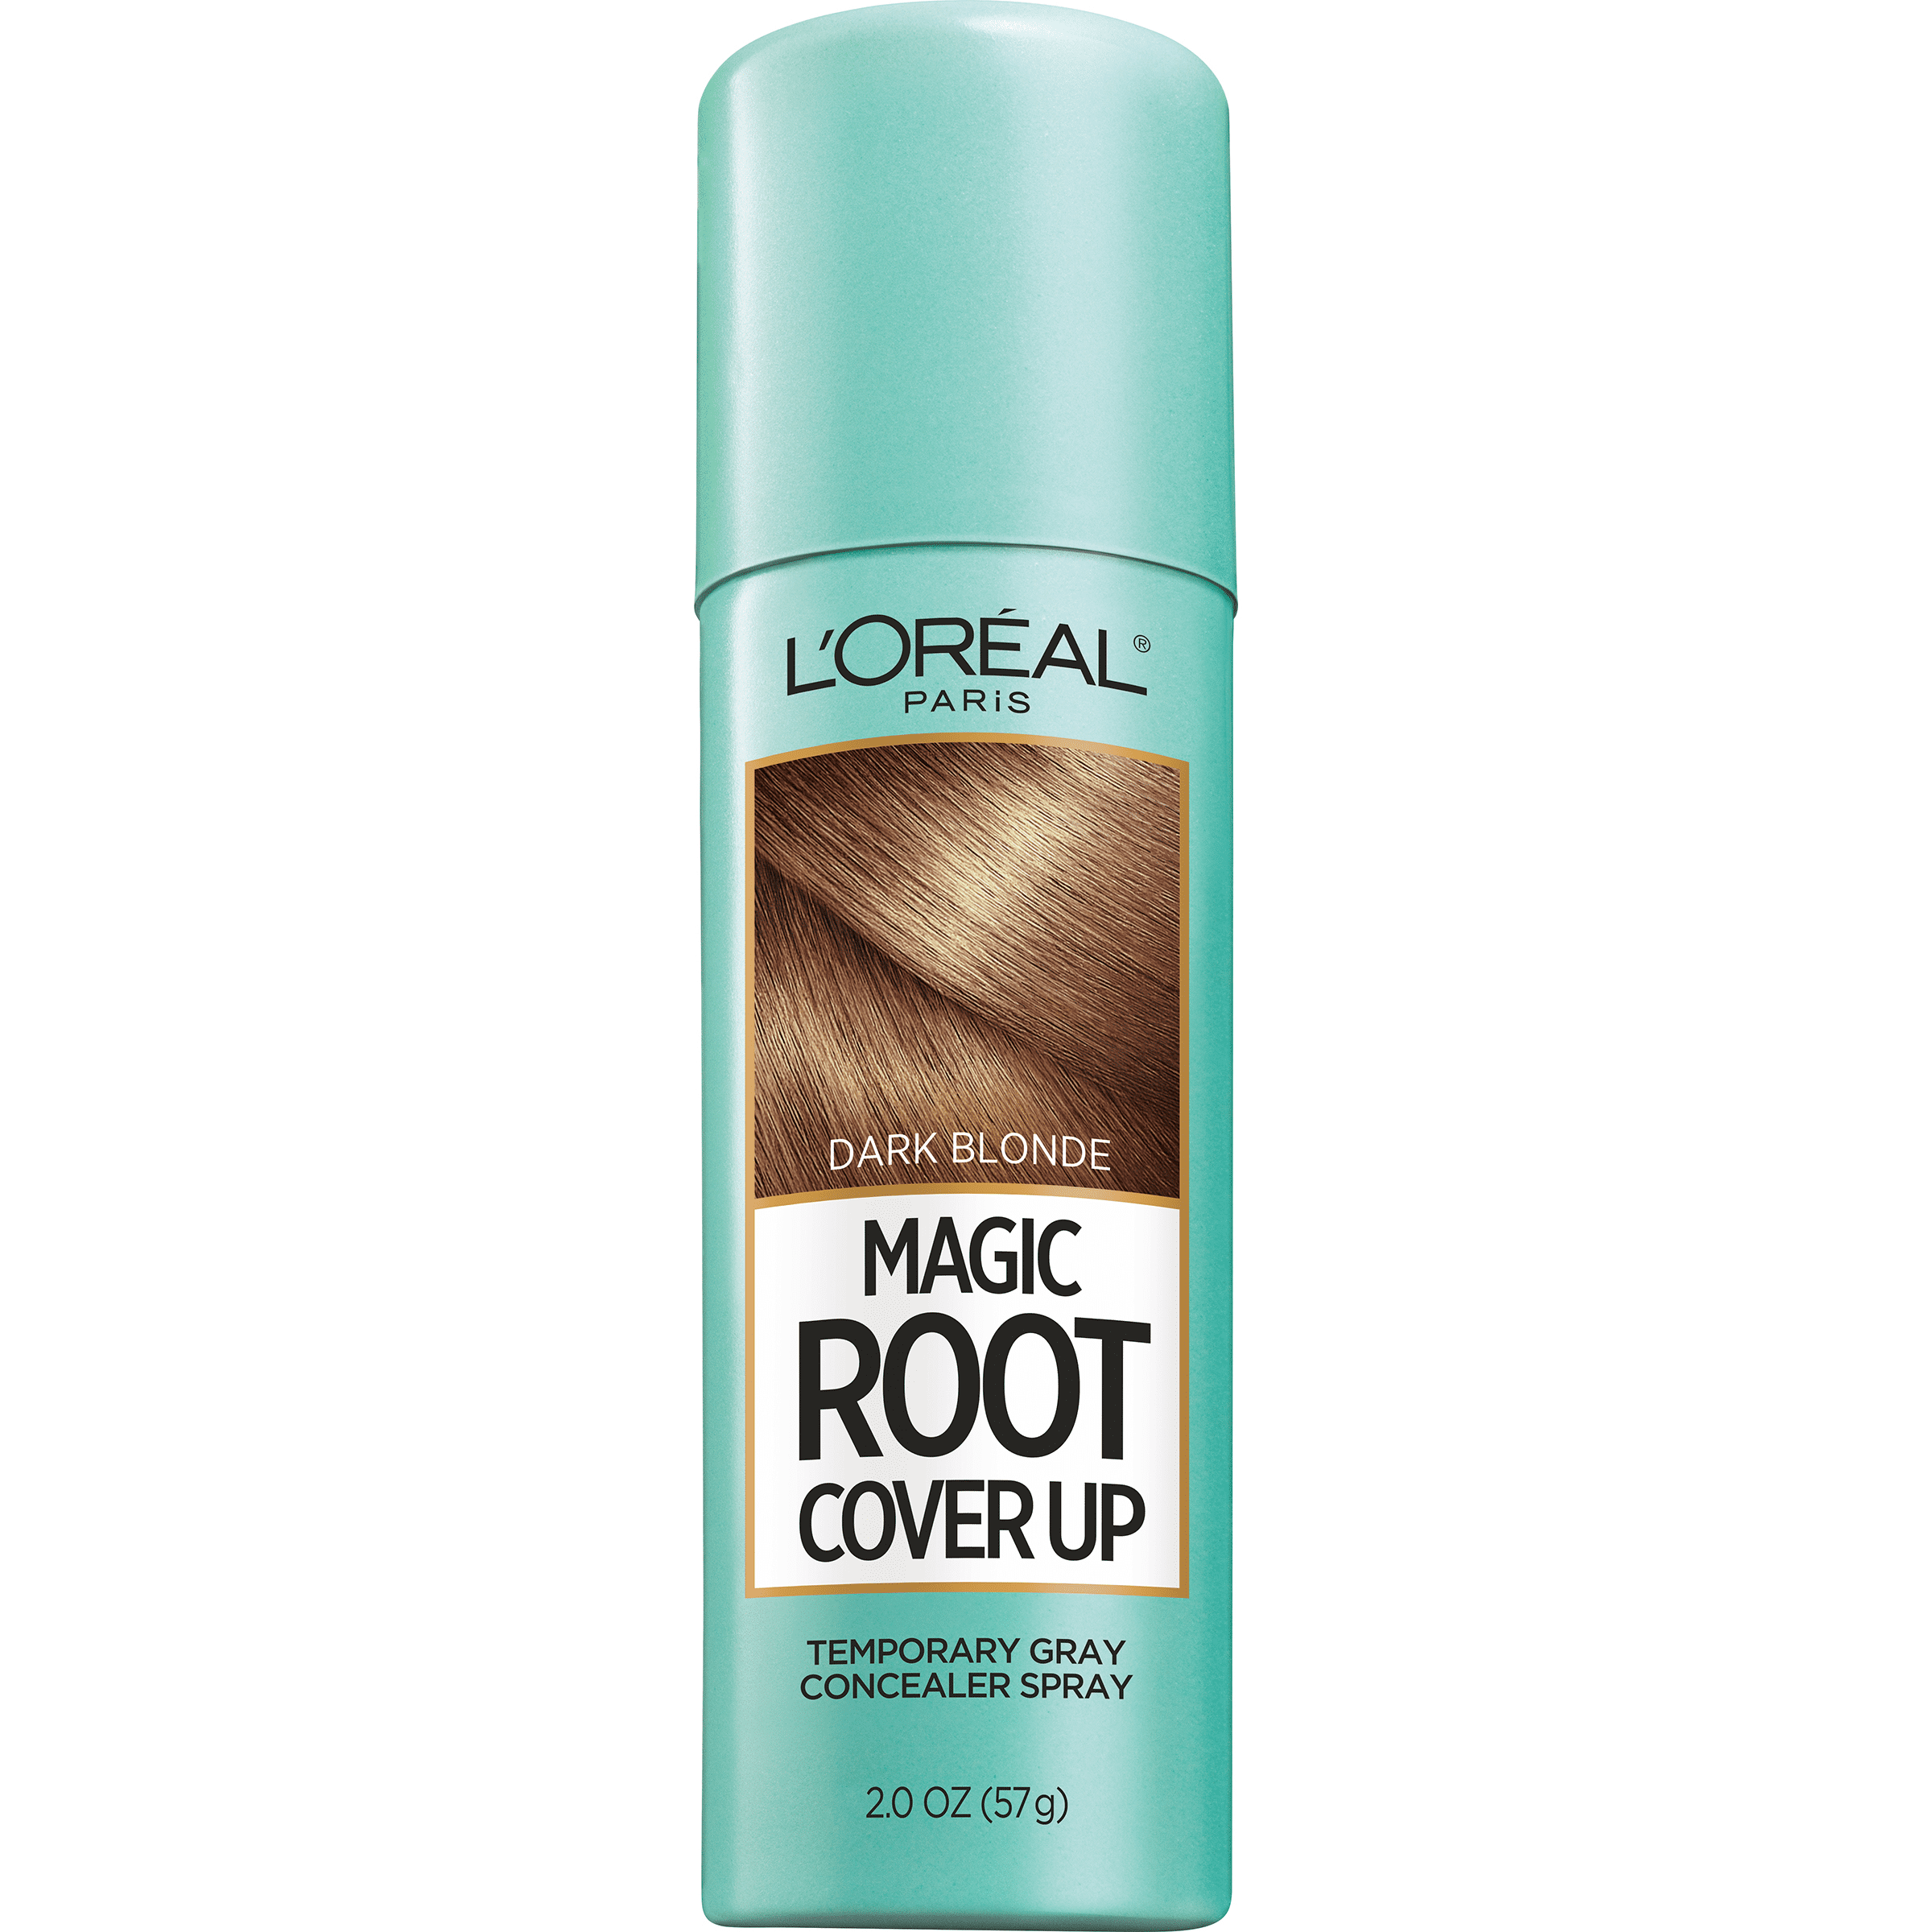 L'Oreal Paris Magic Root Cover Up Concealer Spray, 05 Dark Blonde, 2 oz